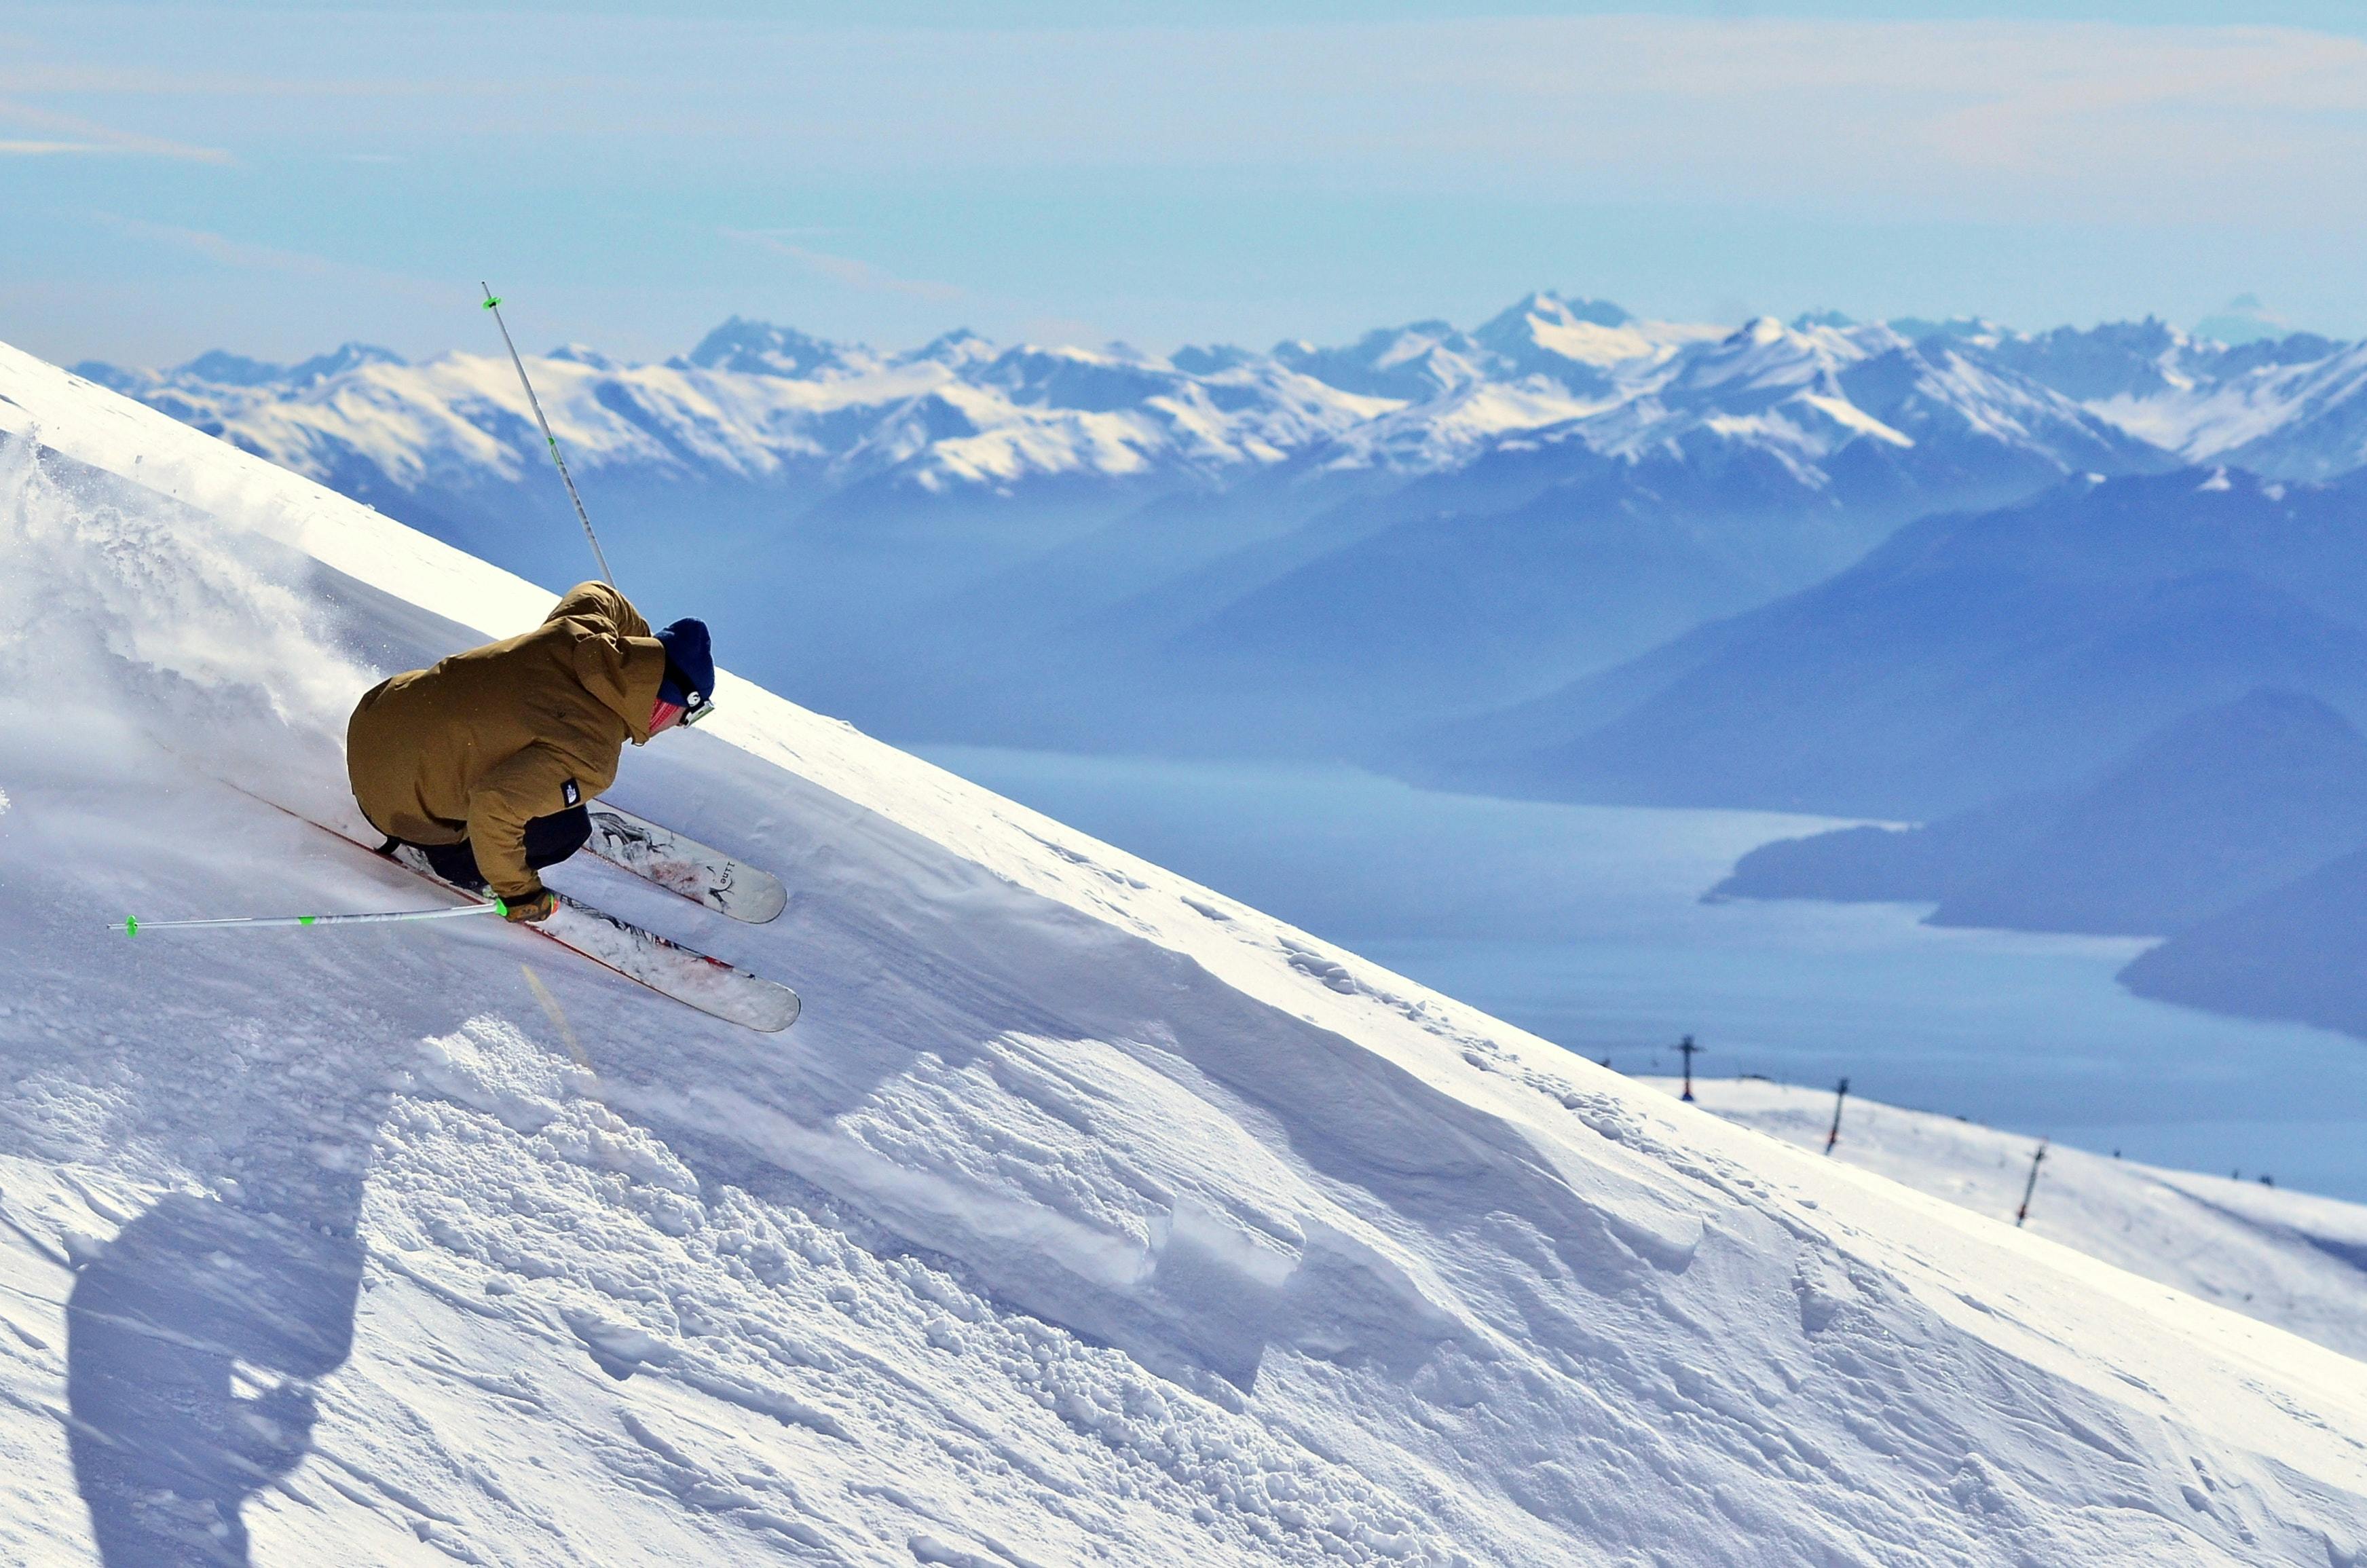 A skier turns on a steep run overlooking mountains